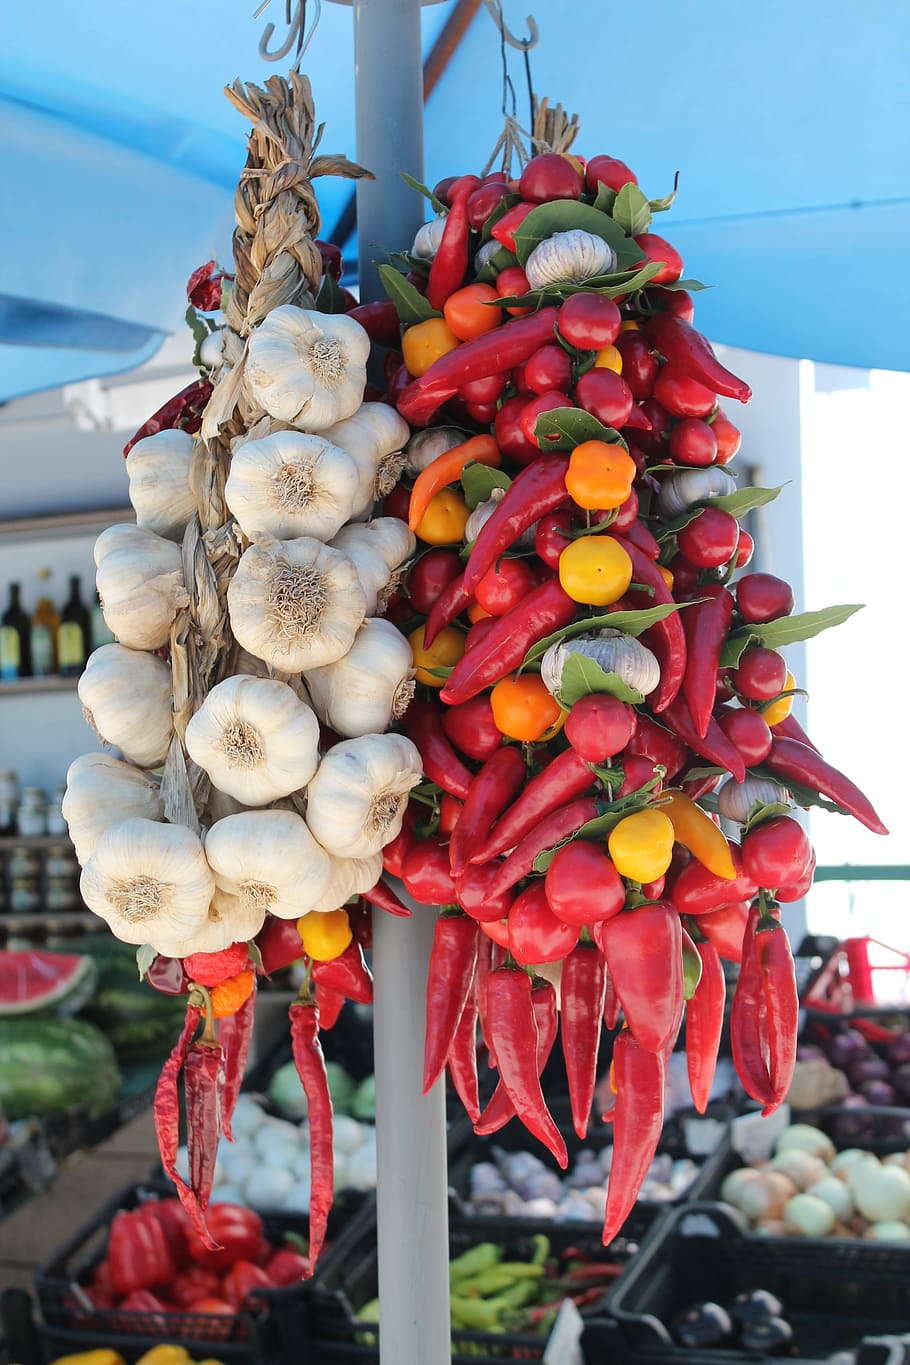 cebolla, pimentón, pimiento, verduras, mercado, mercado de verduras, puesto de verduras, puesto en el mercado, comida, comer